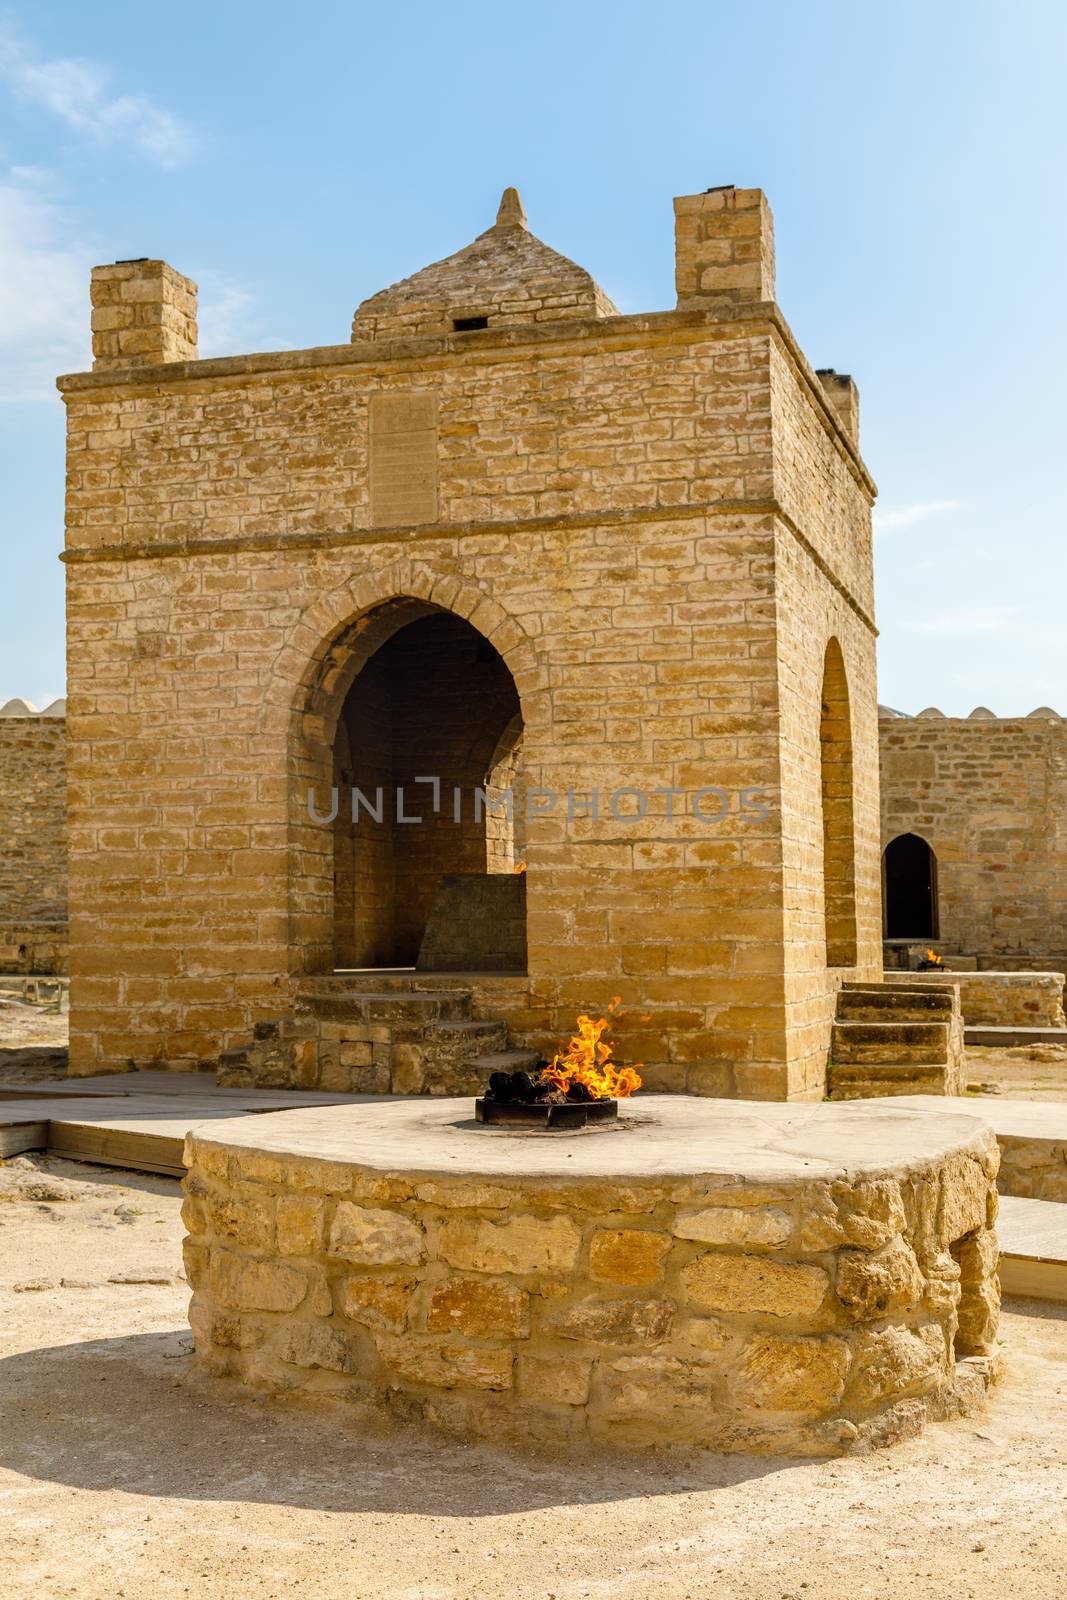 Ancient stone temple of Atashgah, Zoroastrian place of fire worship, Baku, Azerbaijan